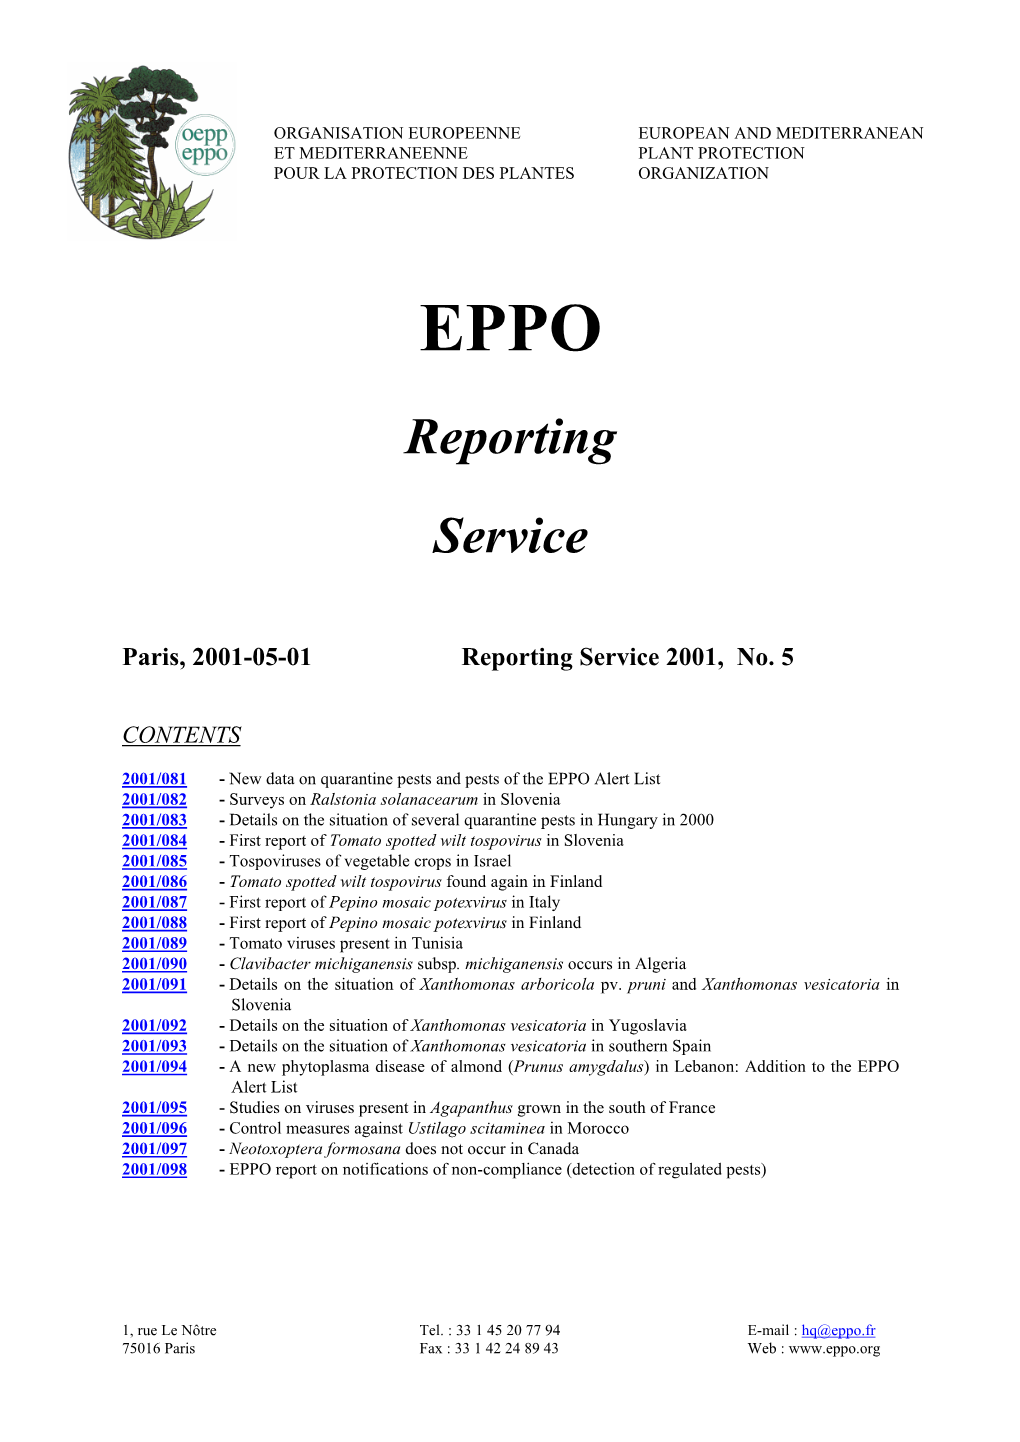 Reporting Service 2001, No